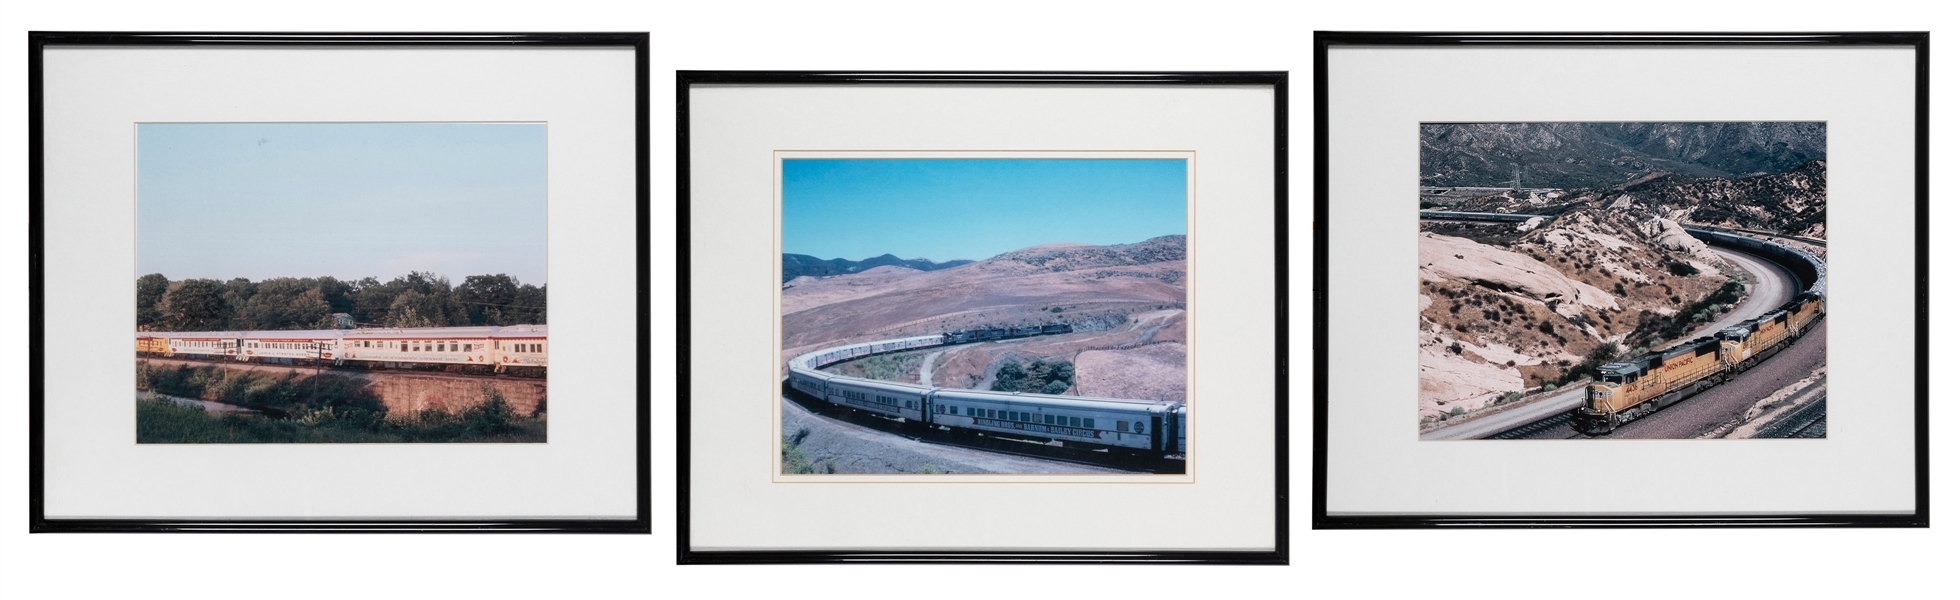  Trio of Framed Circus Train Photographs. Includes photograp...